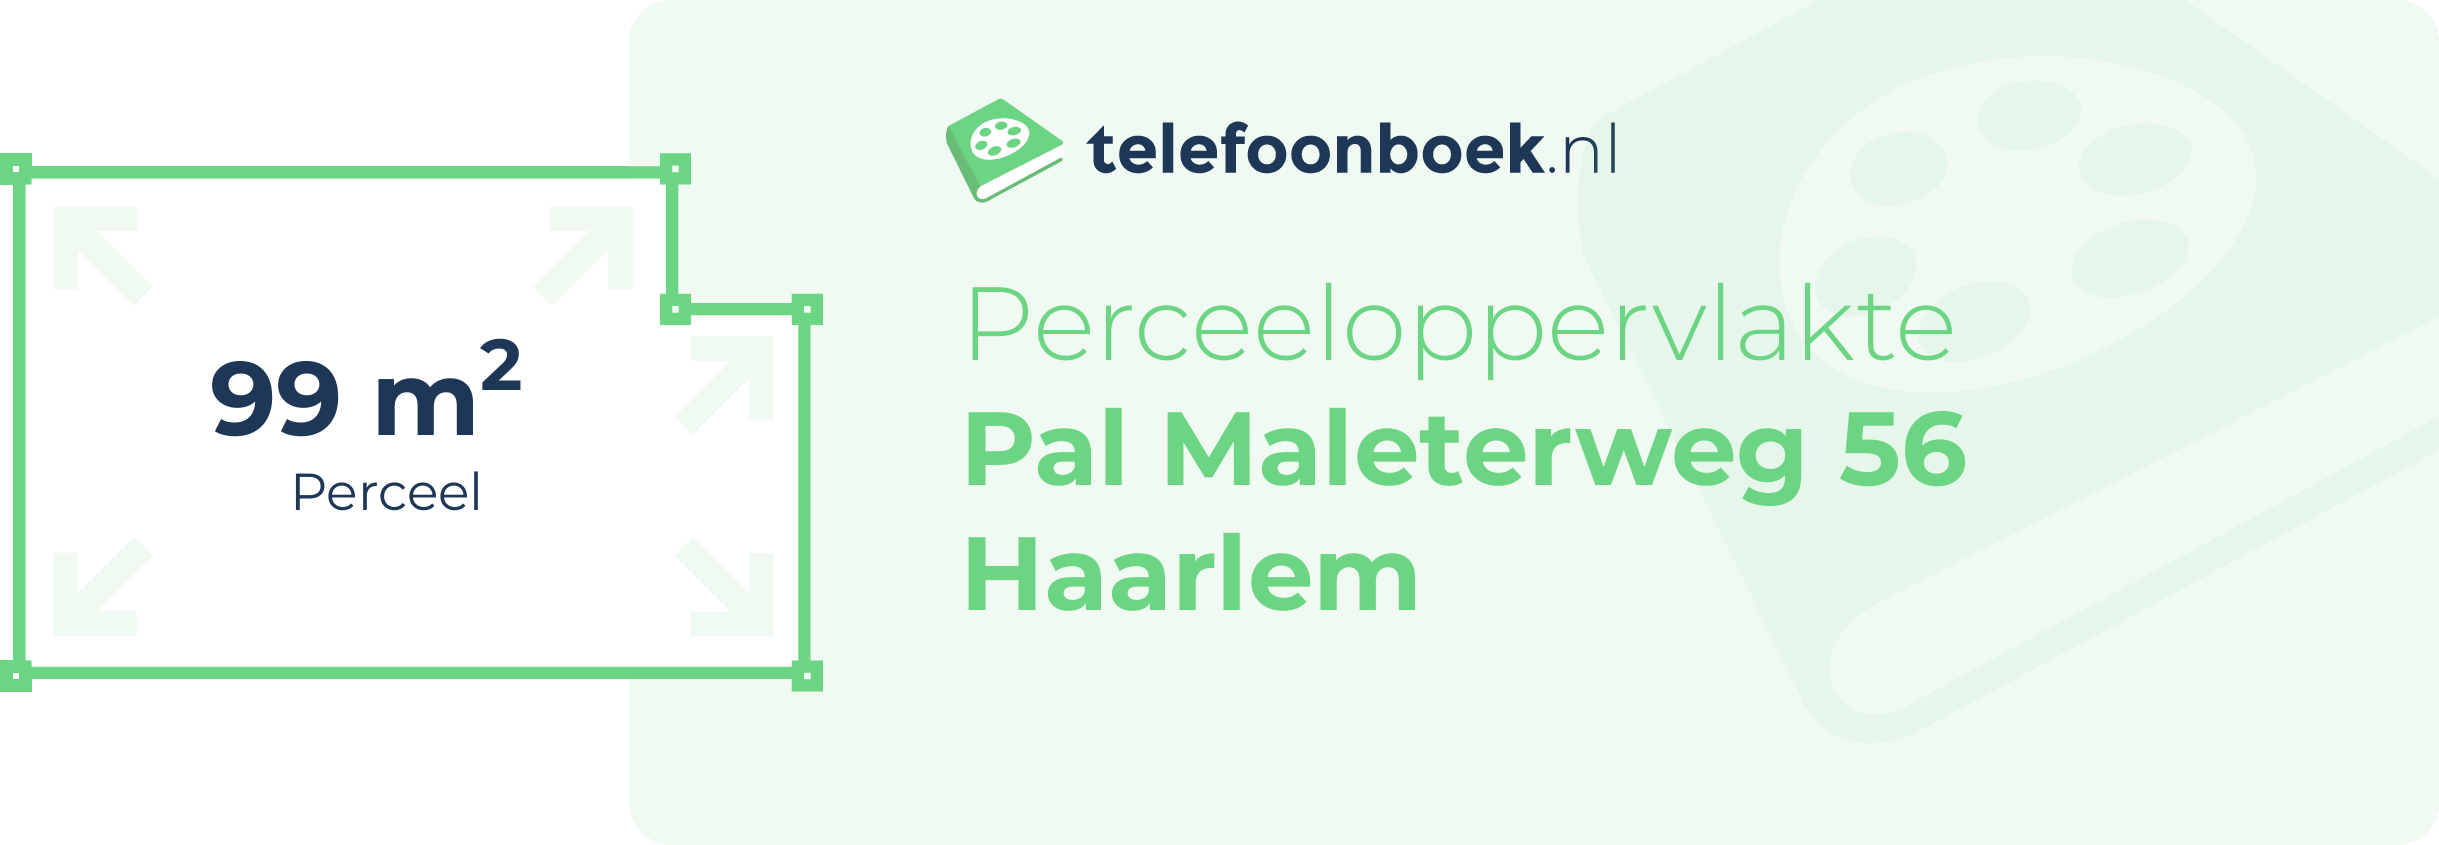 Perceeloppervlakte Pal Maleterweg 56 Haarlem